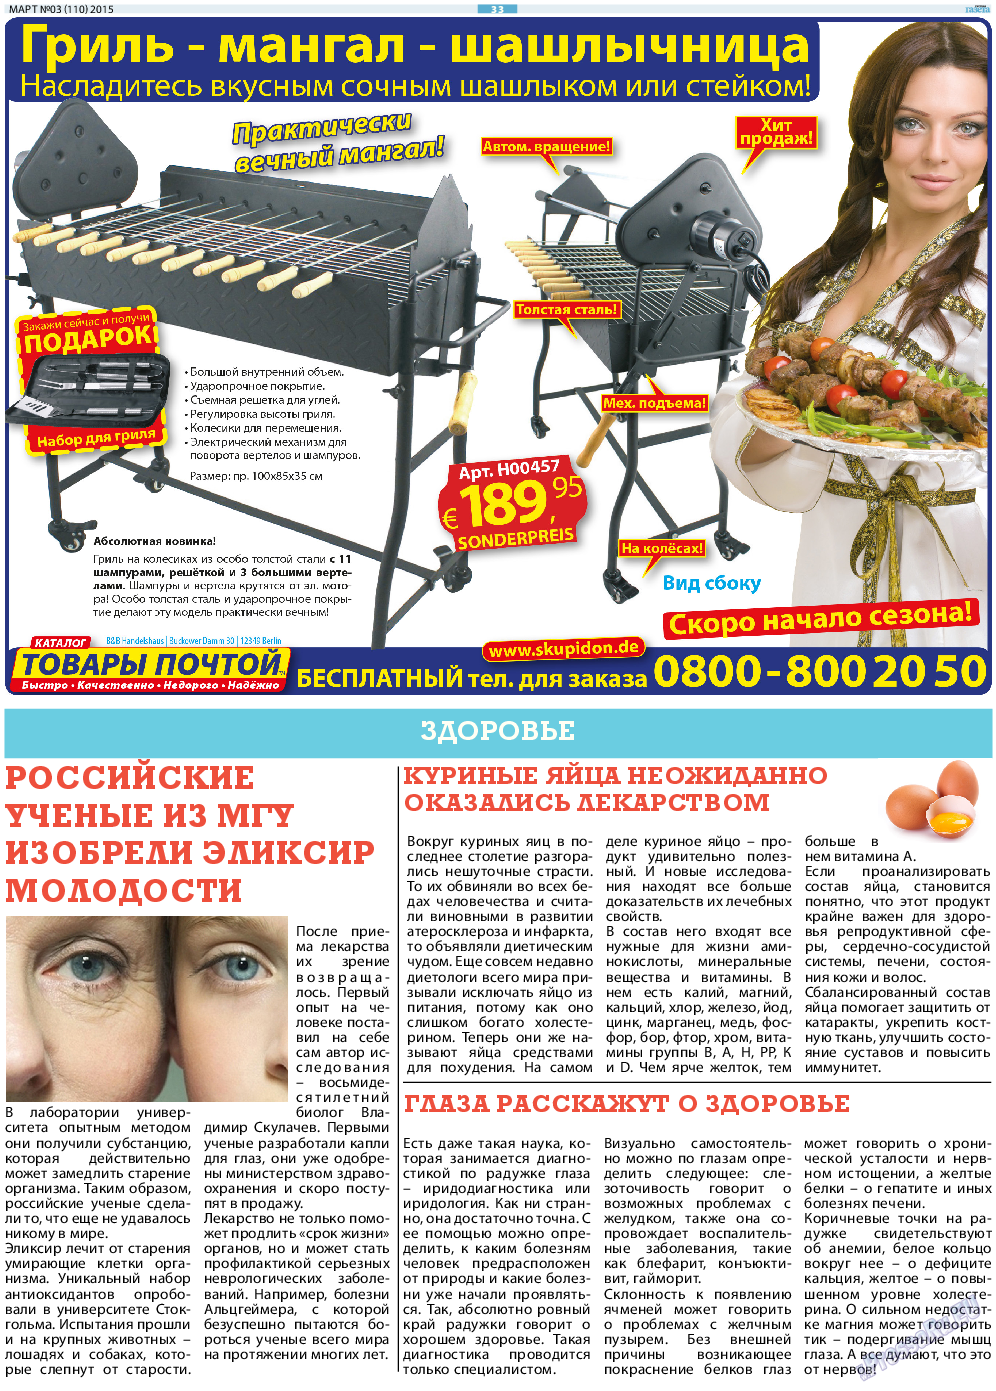 Русская Газета, газета. 2015 №3 стр.33